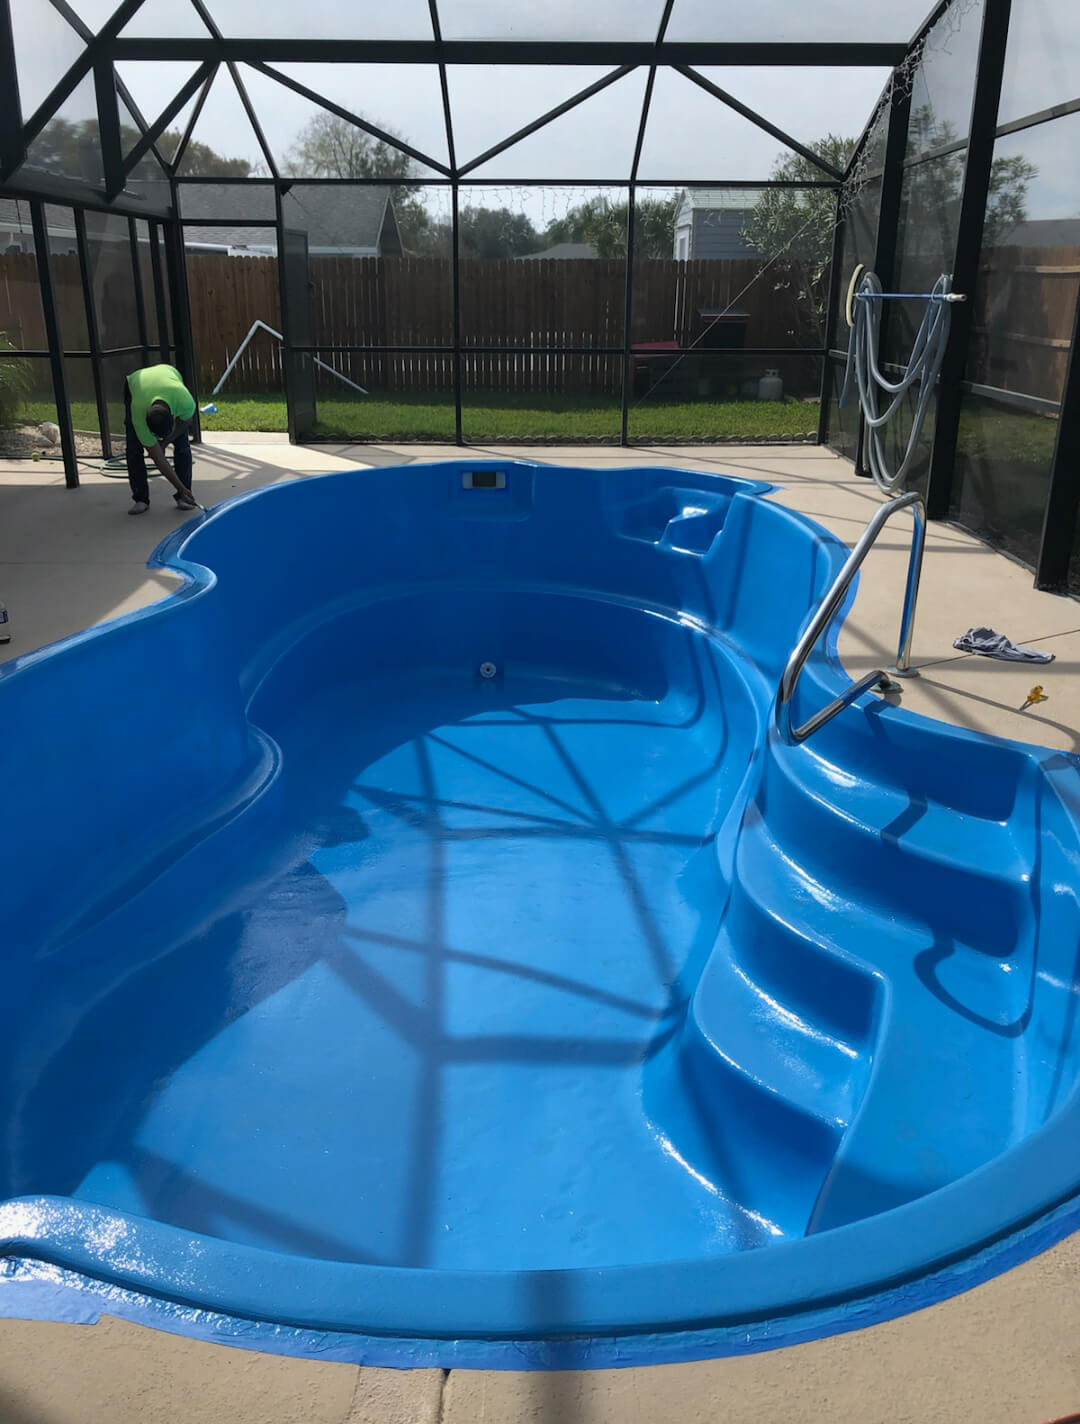 Before Residential fiberglass Pool Resurfaced with AquaGuard 5000 Pool Paint